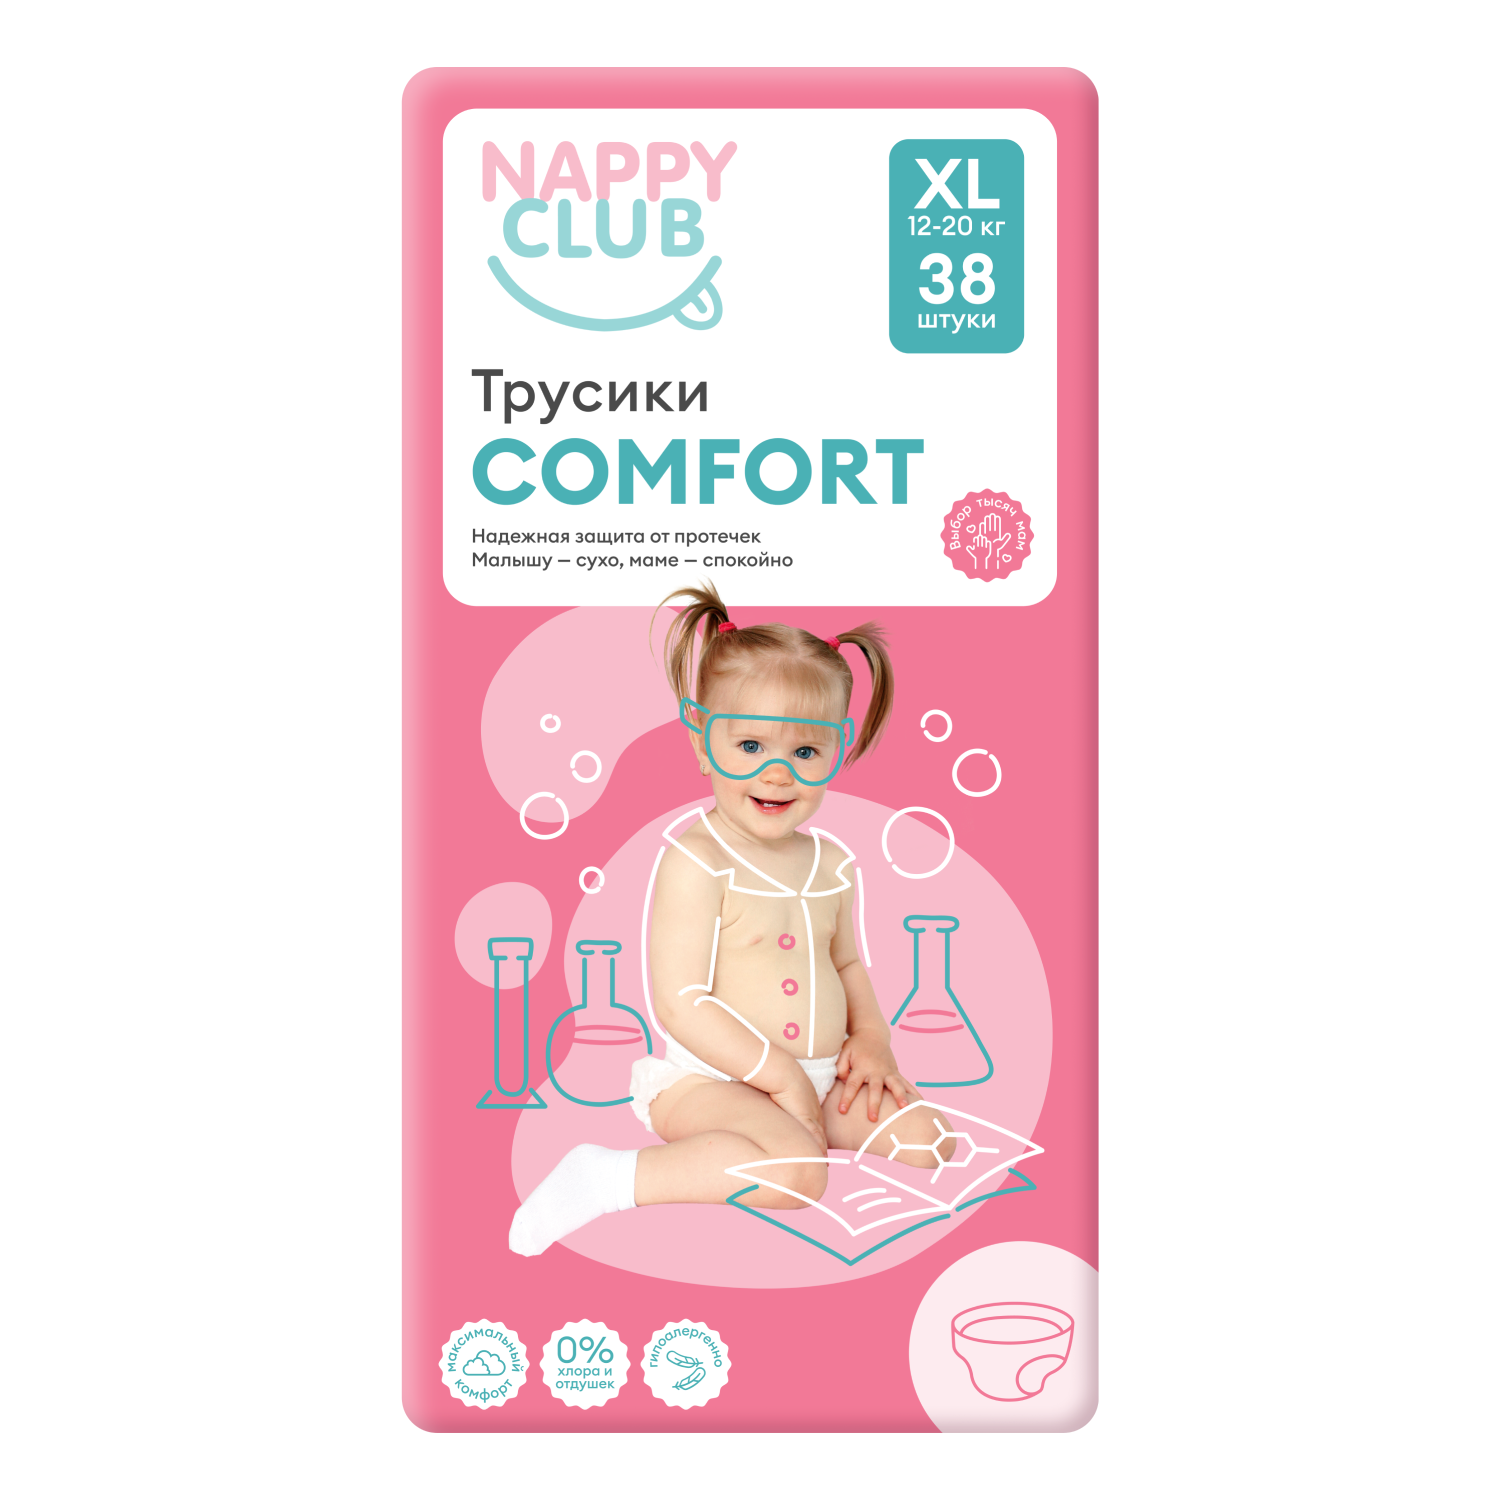 NappyClub трусики Comfort XL (12-20 кг) 38 шт. nappyclub трусики comfort xl 12 20 кг 38 шт